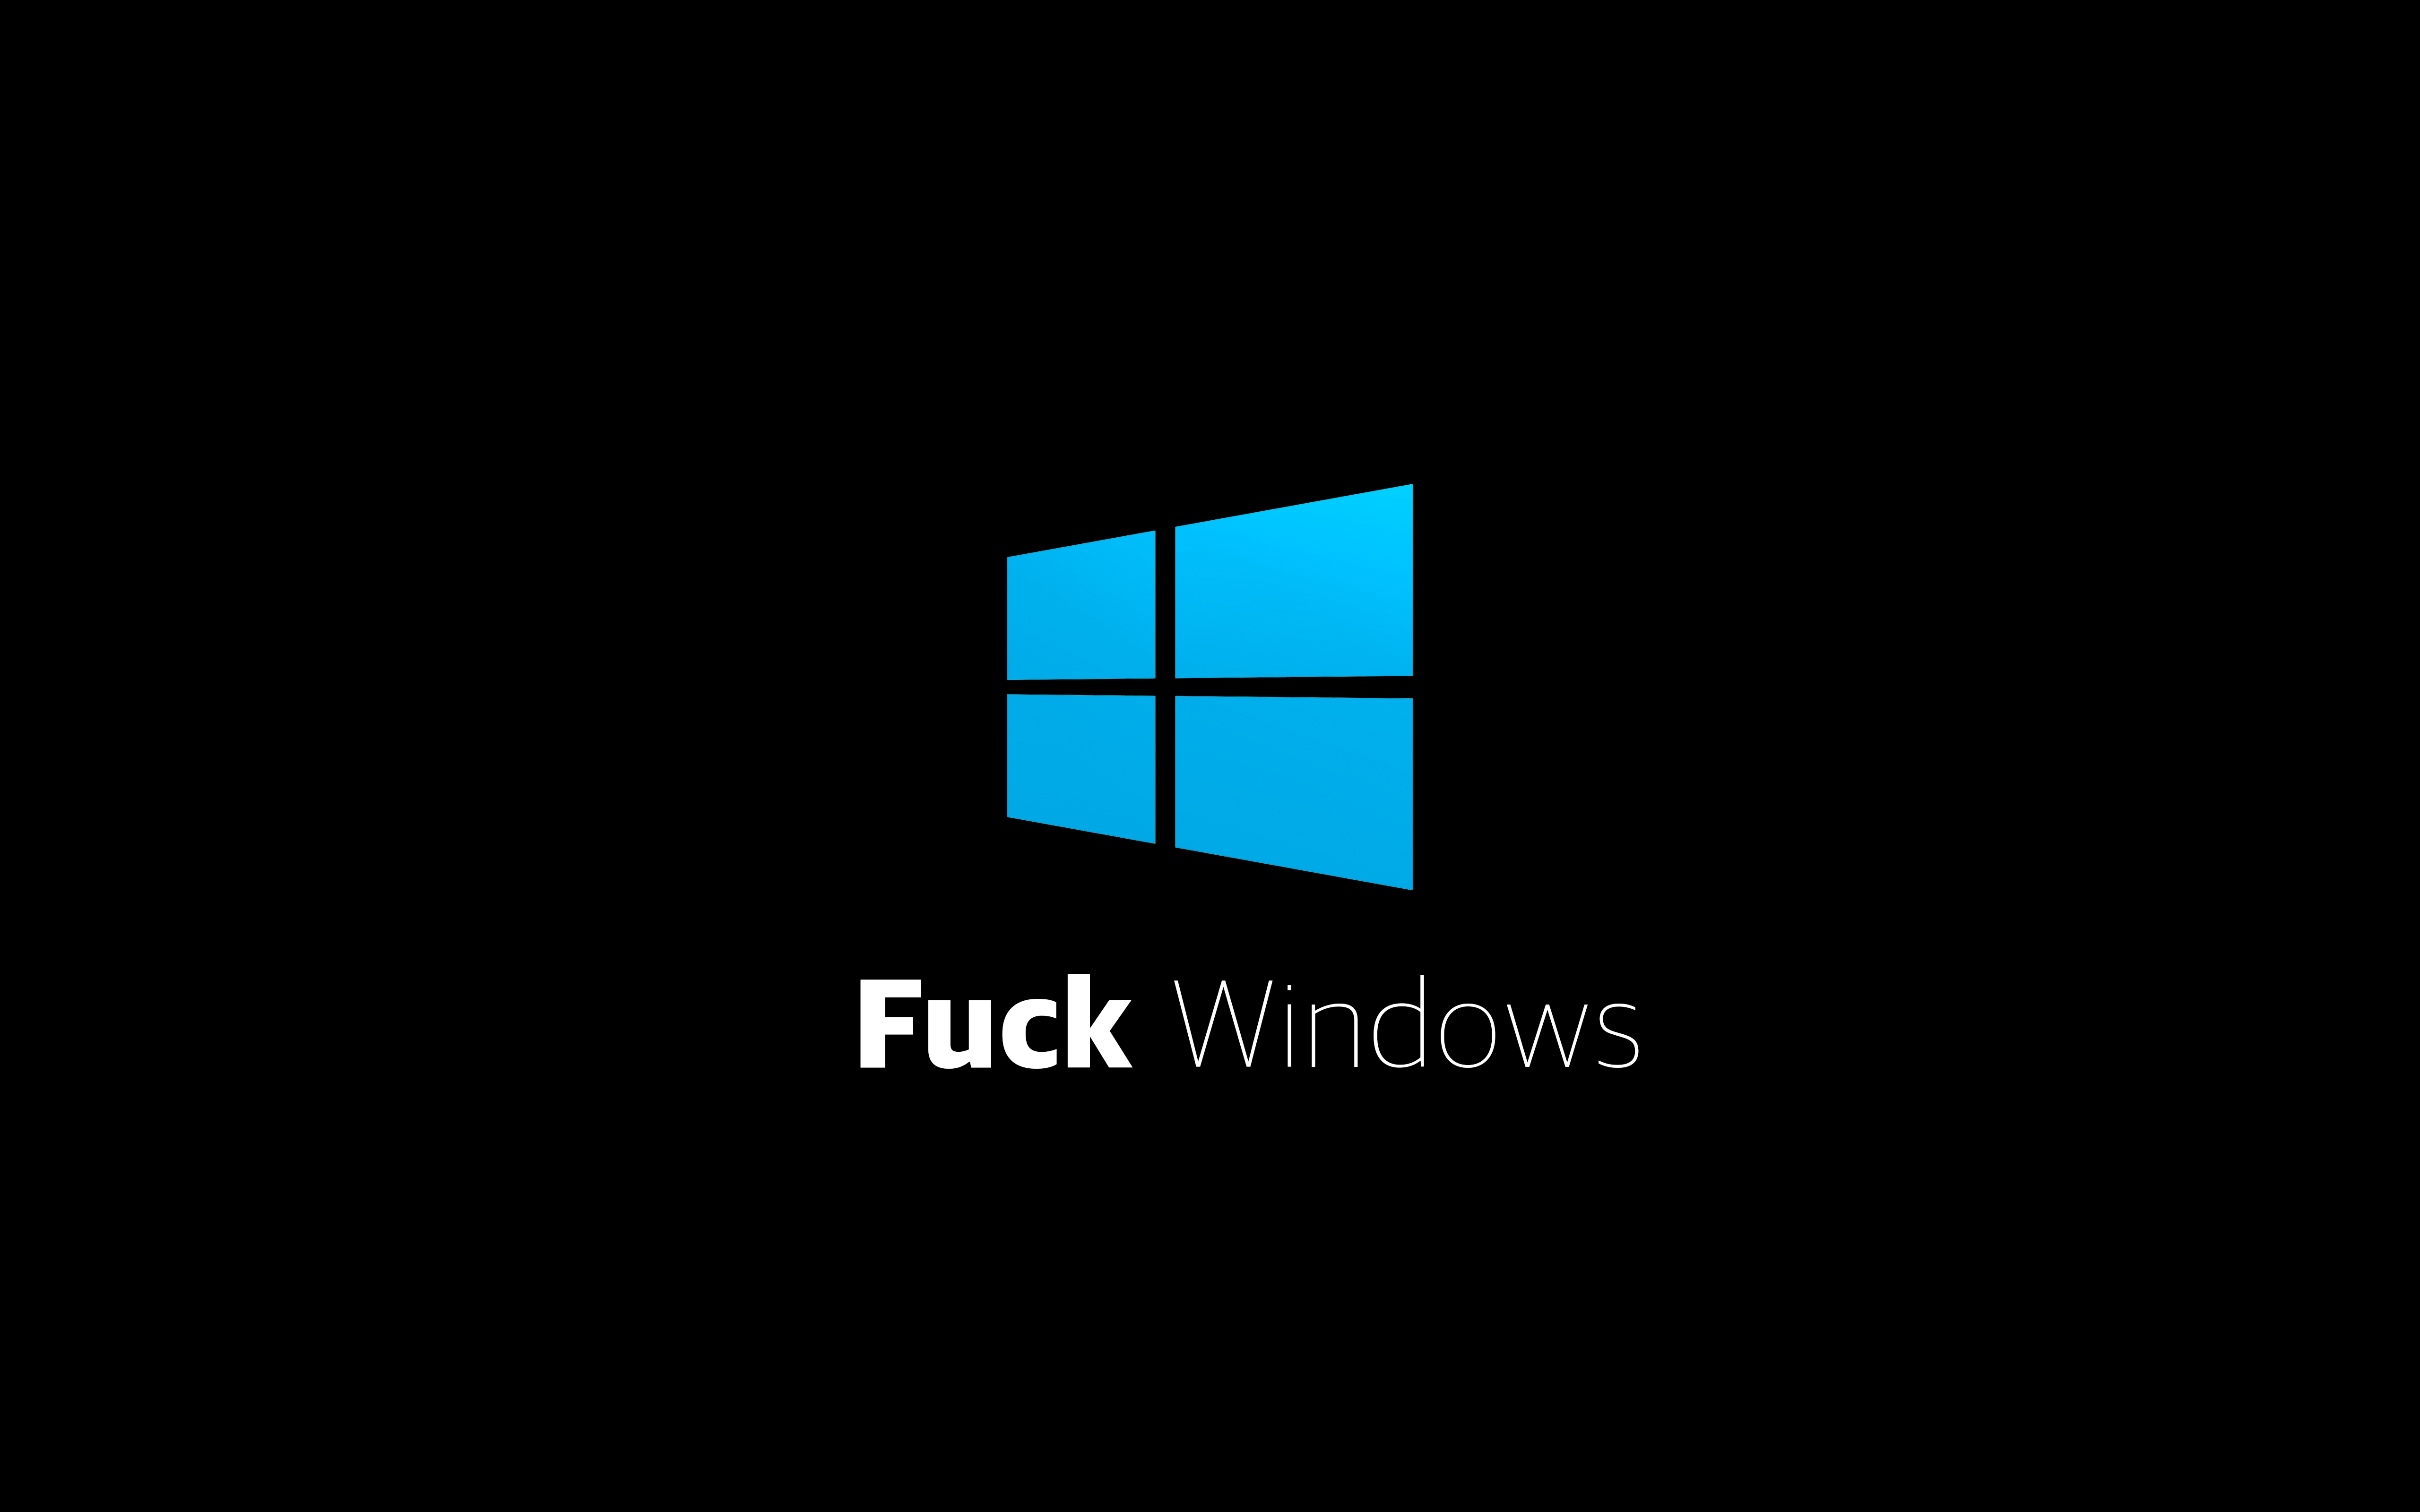 General 5120x3200 Windows 10 Microsoft fuck logo simple background black background operating system